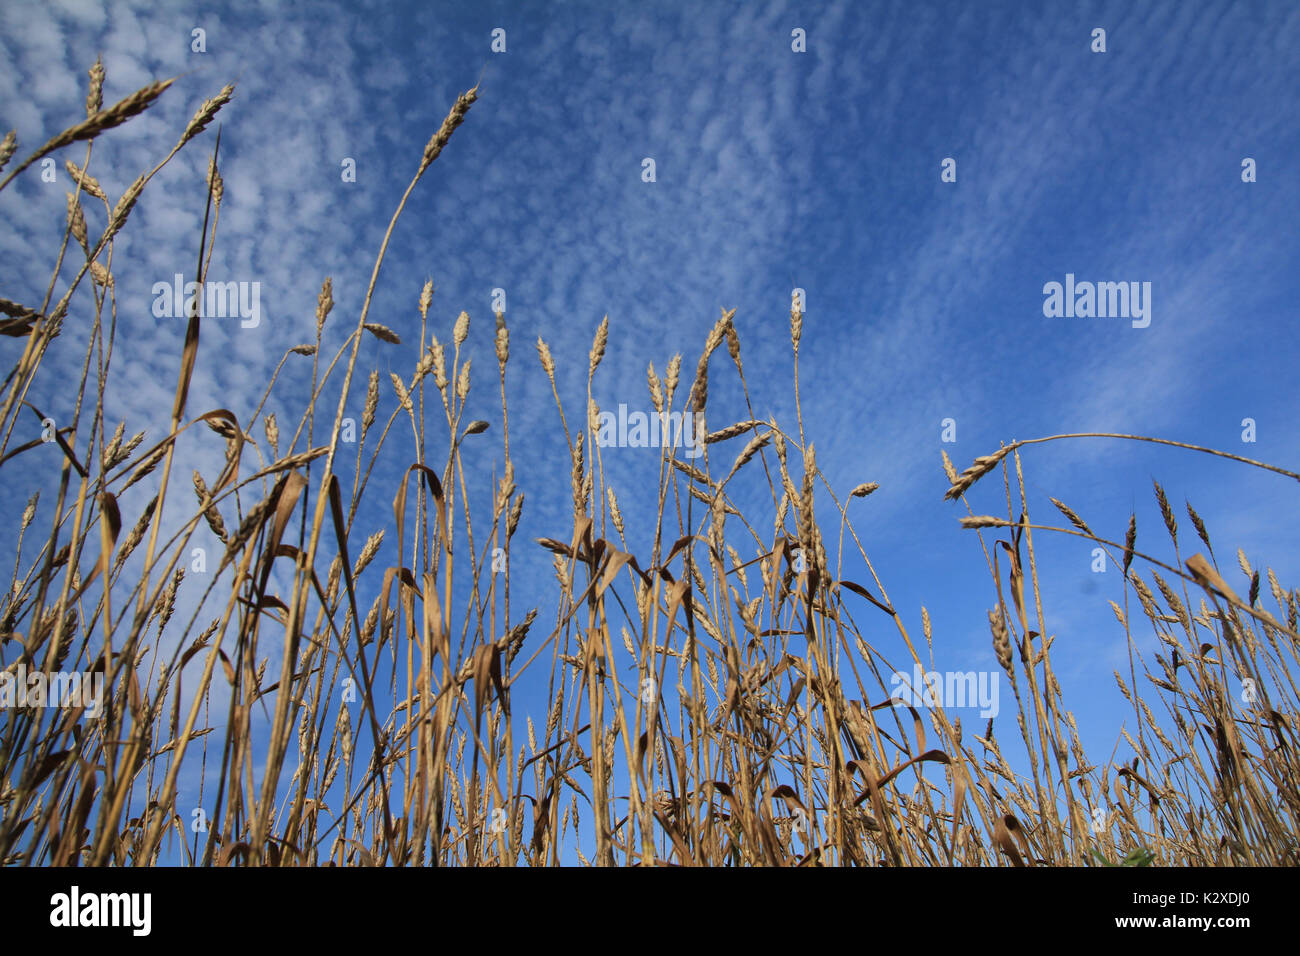 Wheat ears ripen in a field against a blue sky background Stock Photo